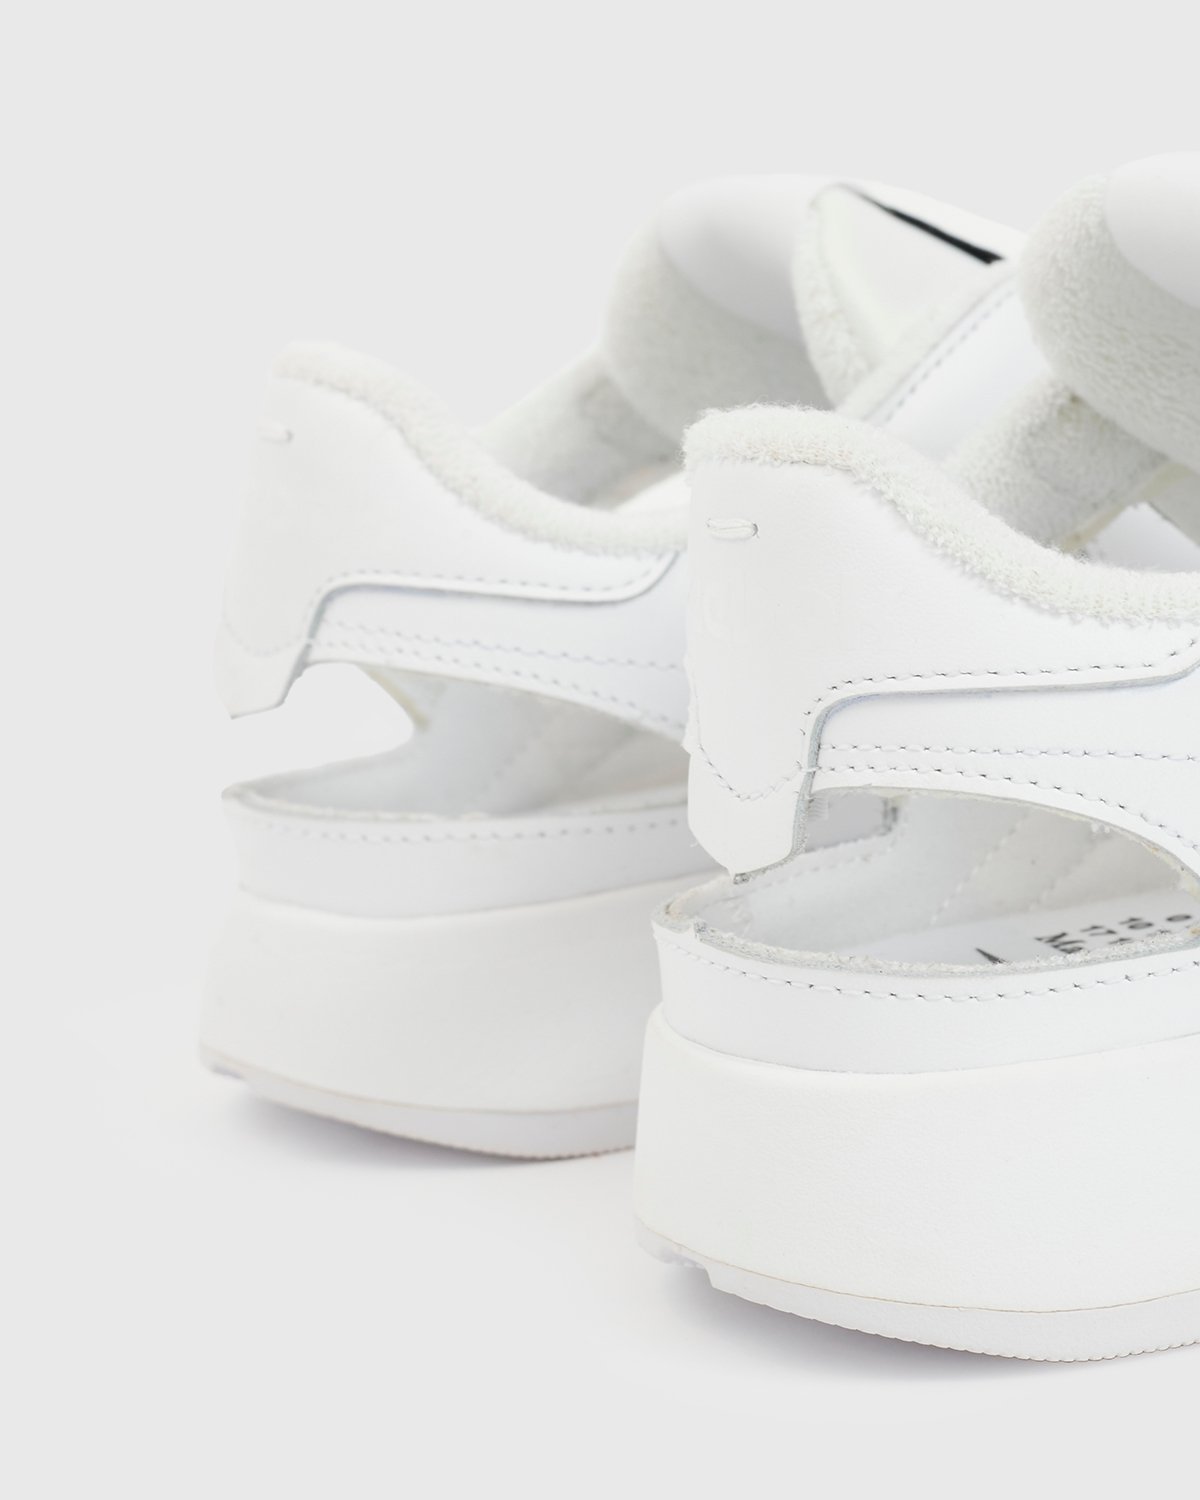 Maison Margiela x Reebok - Classic Leather Tabi Low White - Footwear - White - Image 5